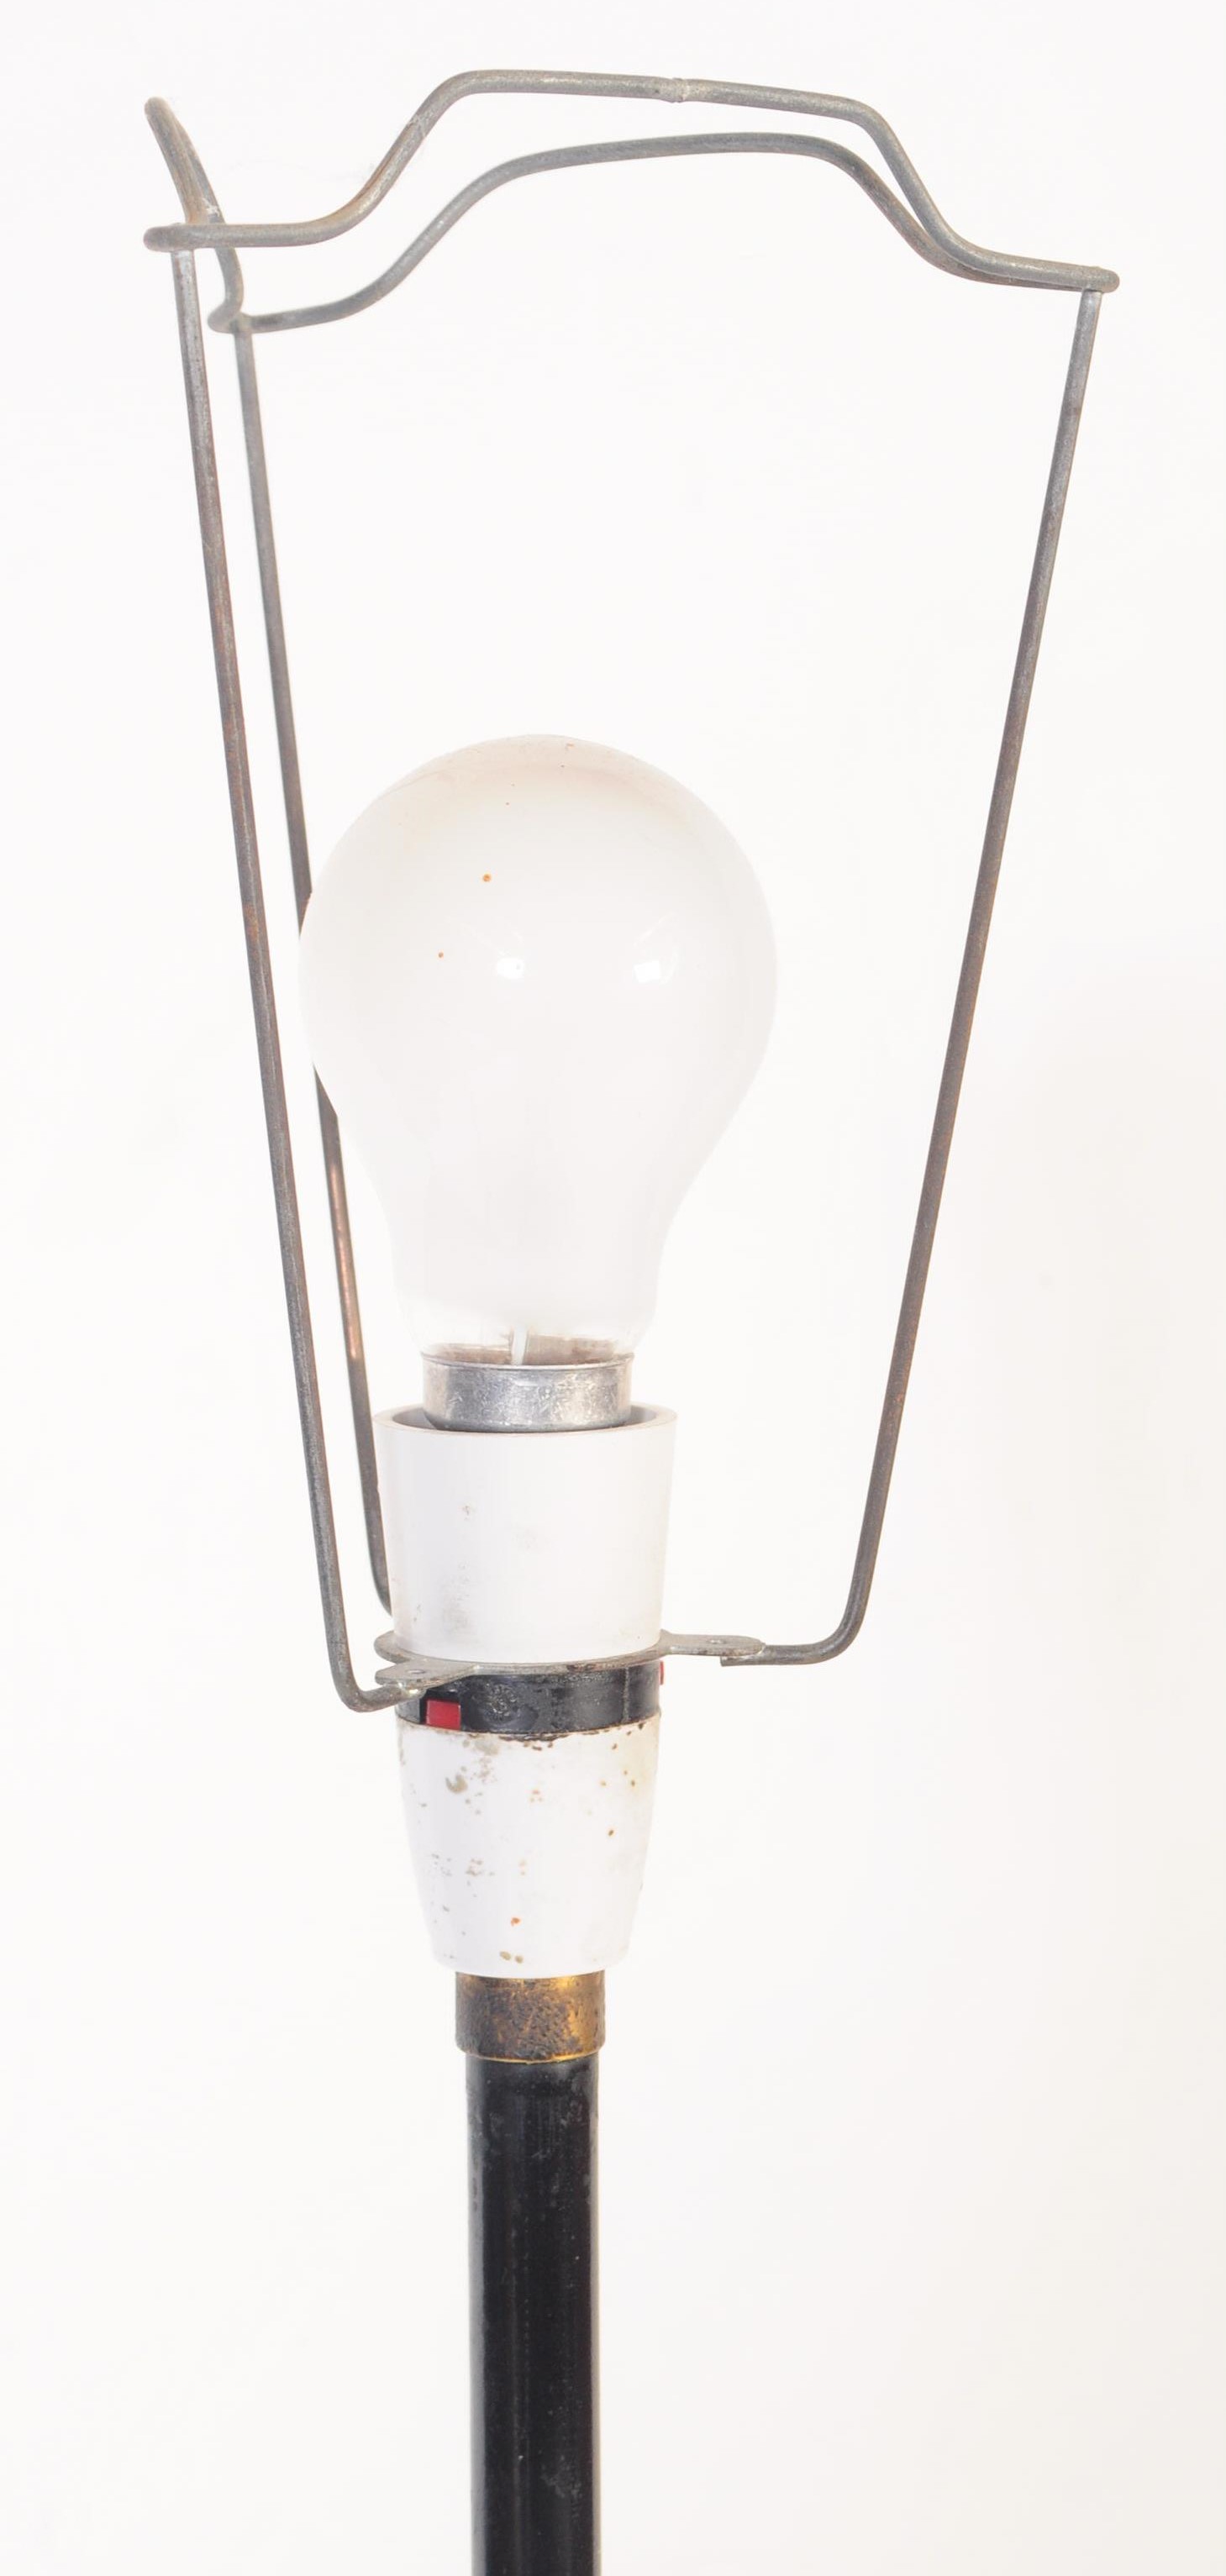 MID CENTURY TEAK WOOD / METAL STANDARD LAMP - DANISH INSPIRED - Image 2 of 5